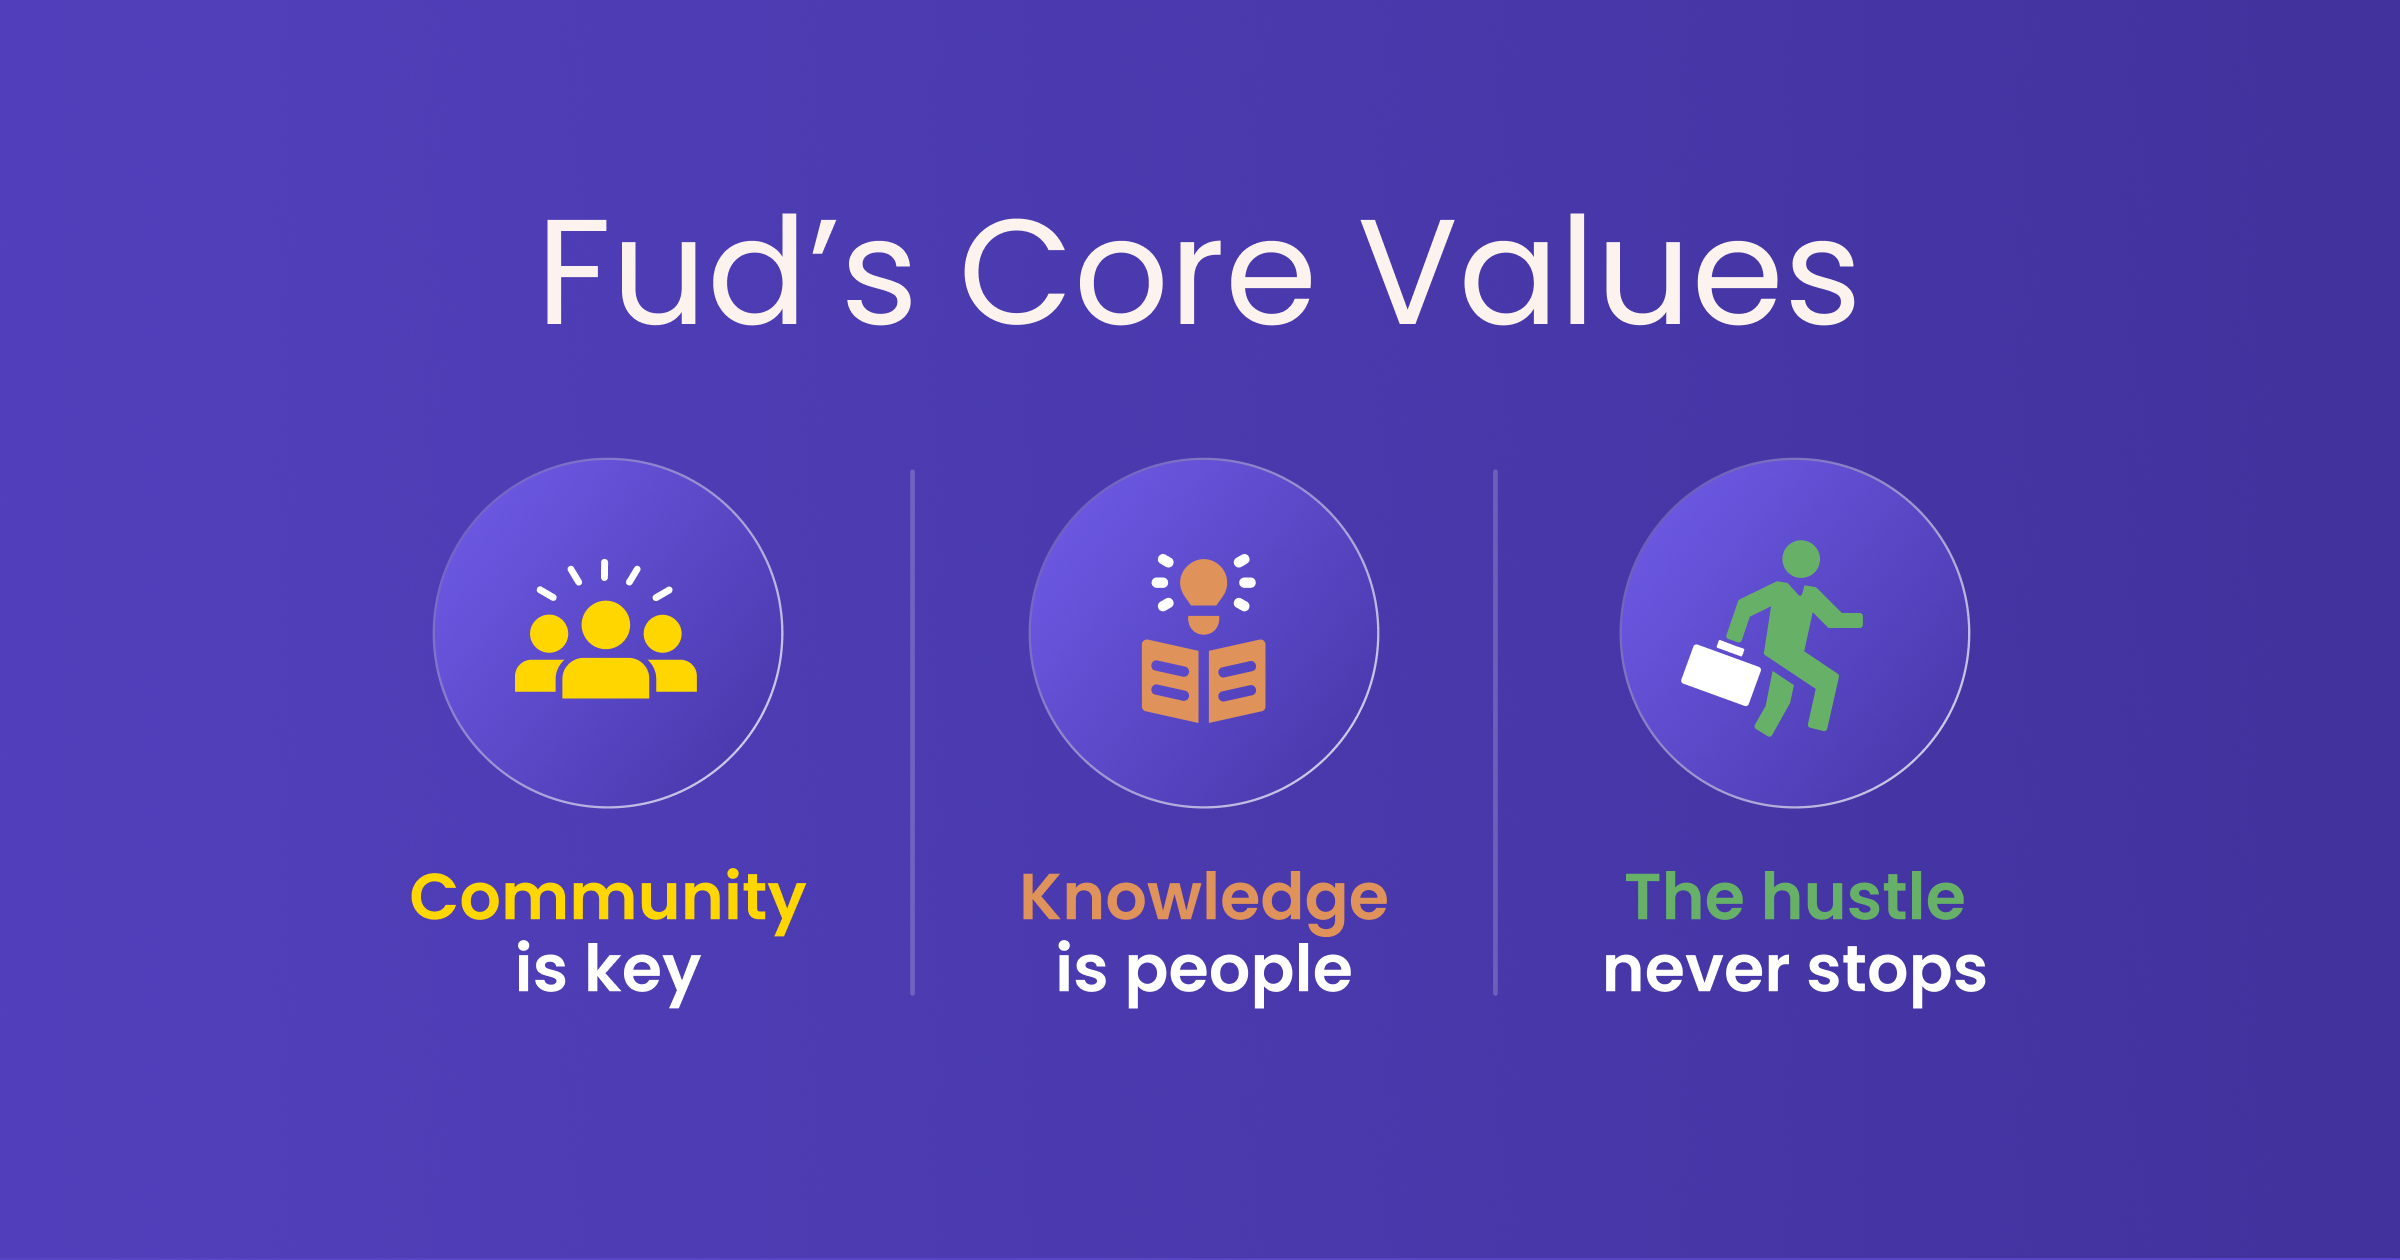 Fud core values